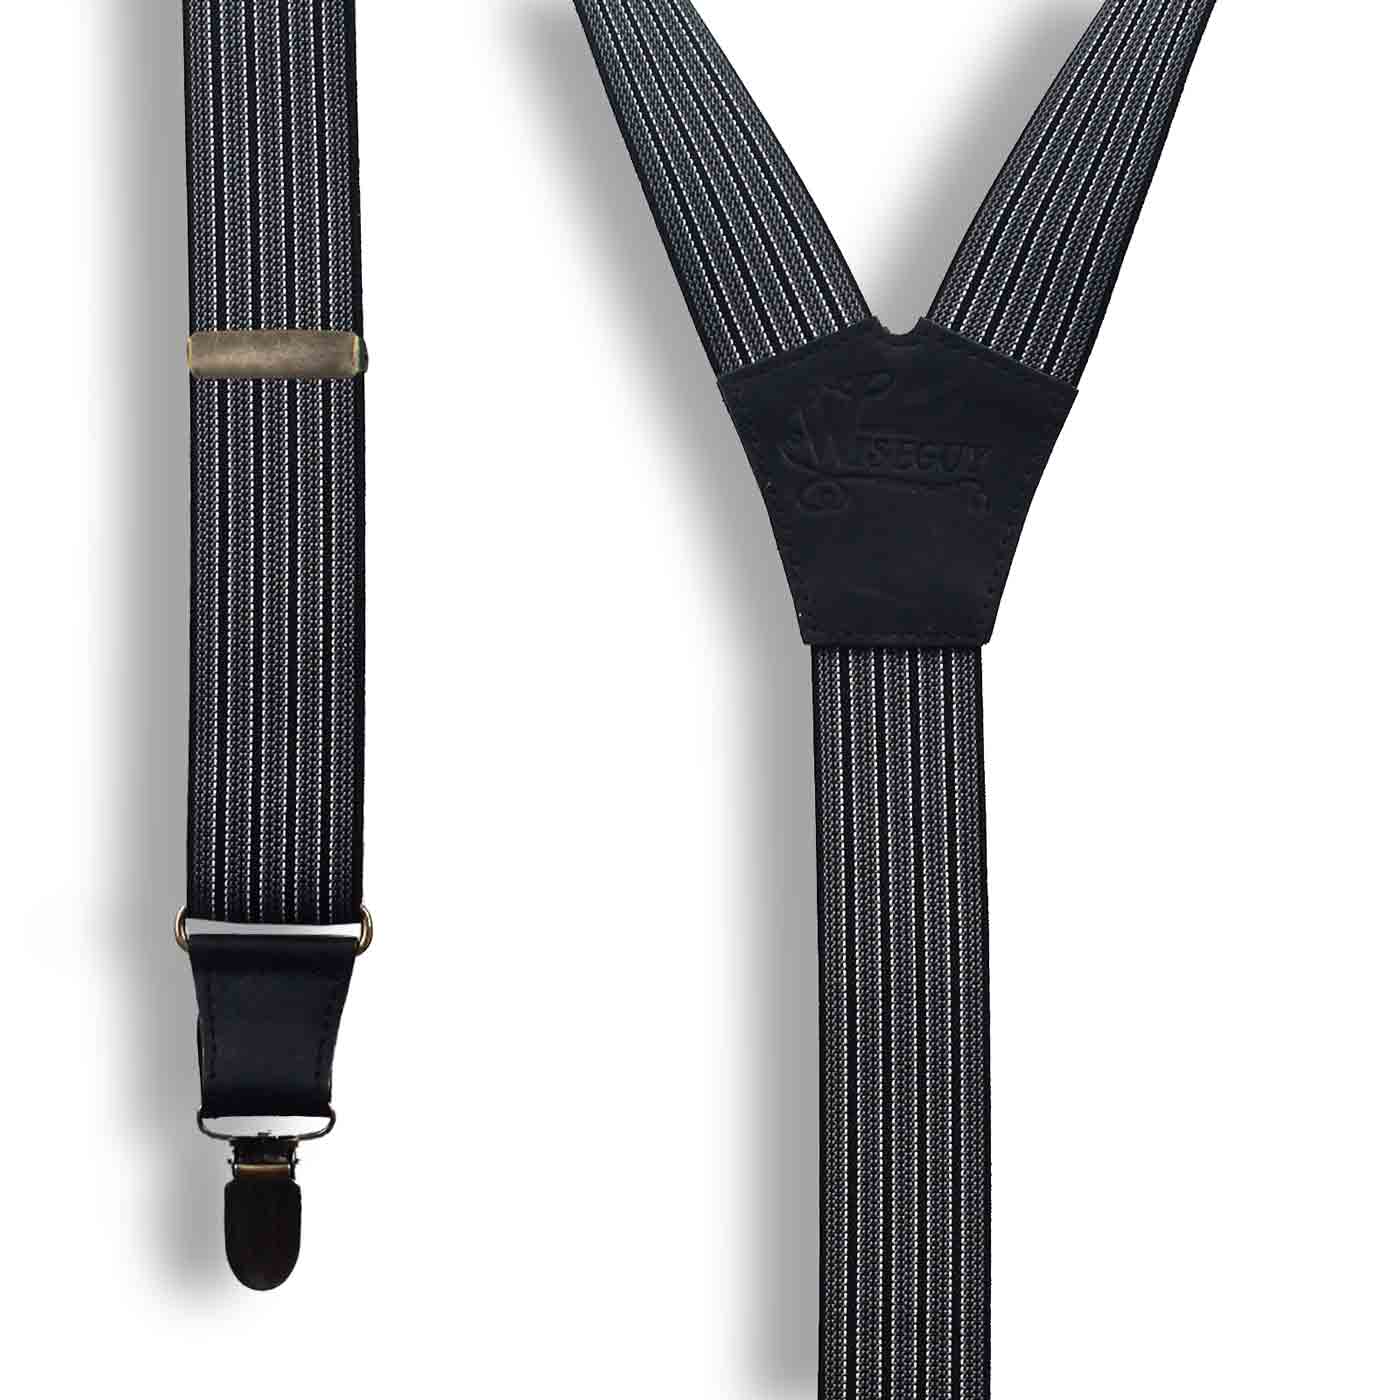 The Gentleman Formal Dress Striped Suspenders 1.3 inch wide - Wiseguy Suspenders